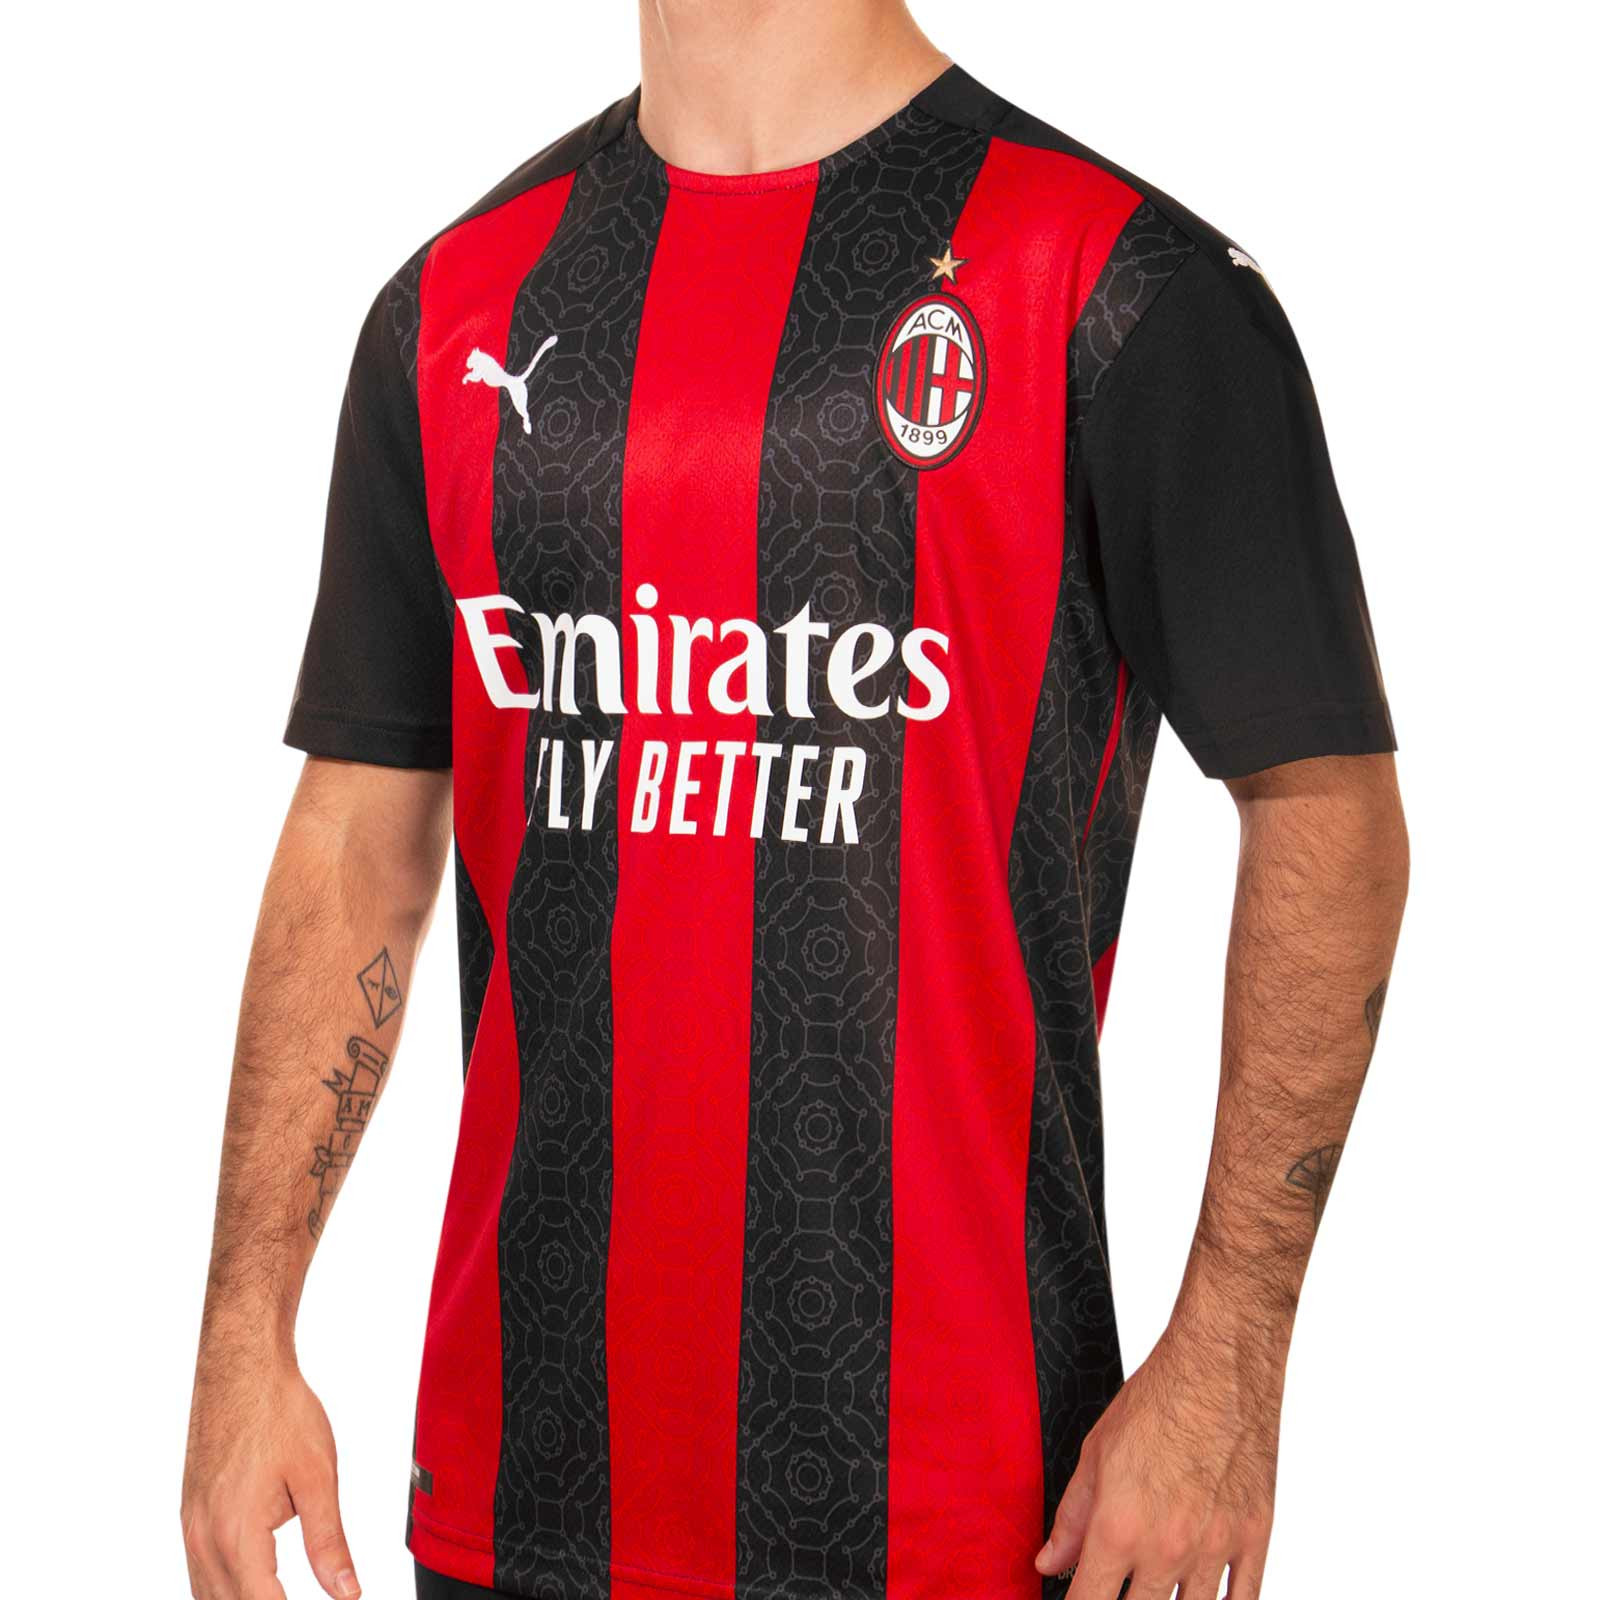 Camiseta Puma AC Milan 2020 2021 roja negra | futbolmania